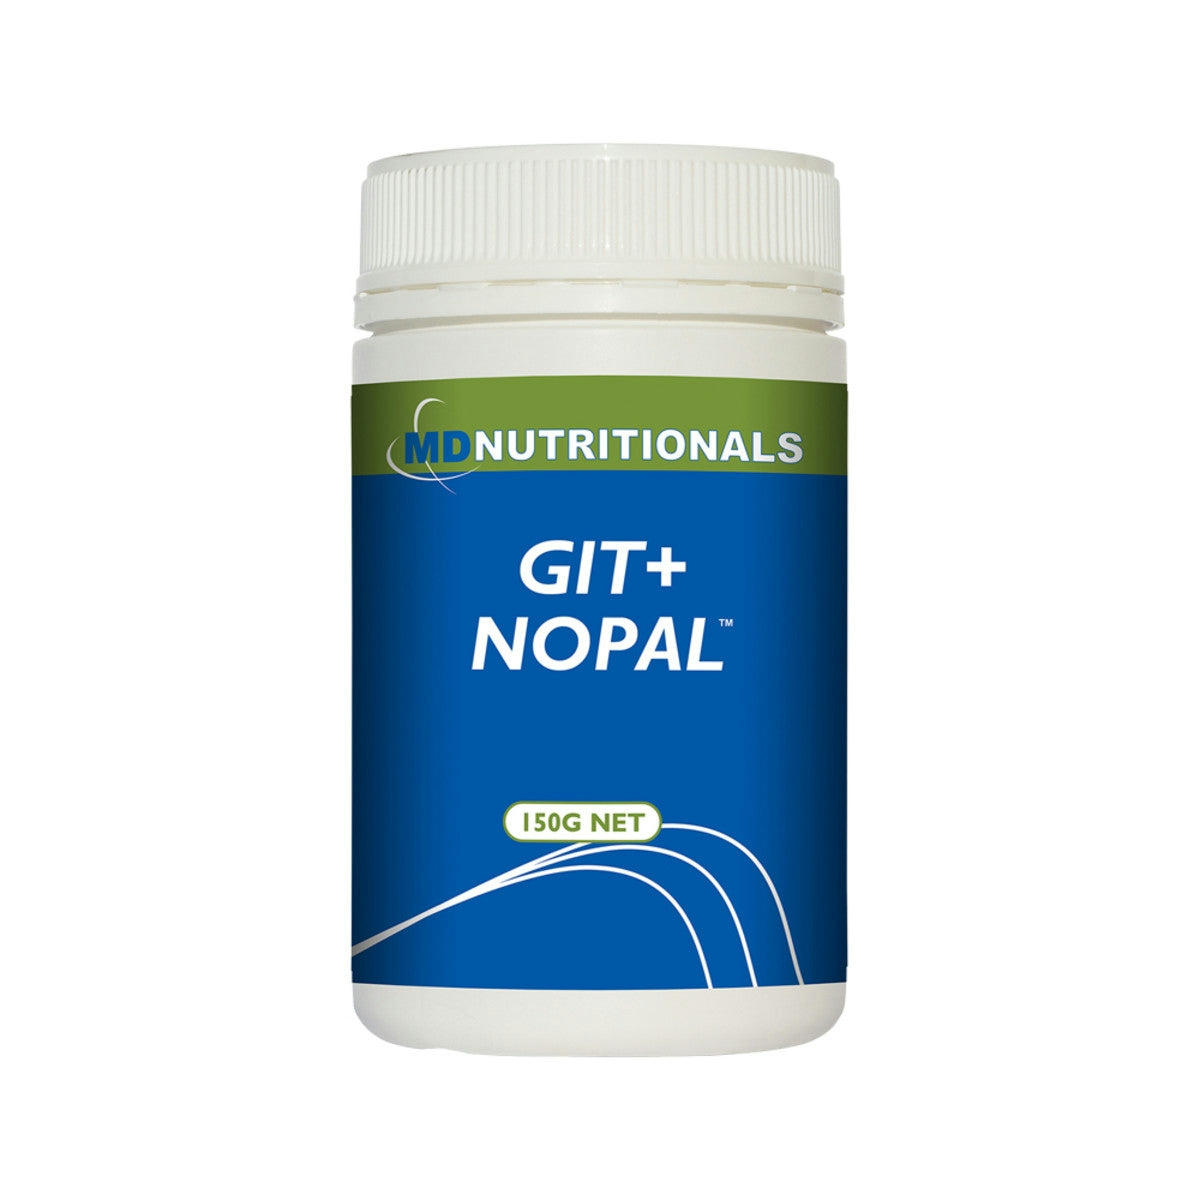 image of Md Nutritionals GIT + NOPAL Powder 150g Powder on white background 